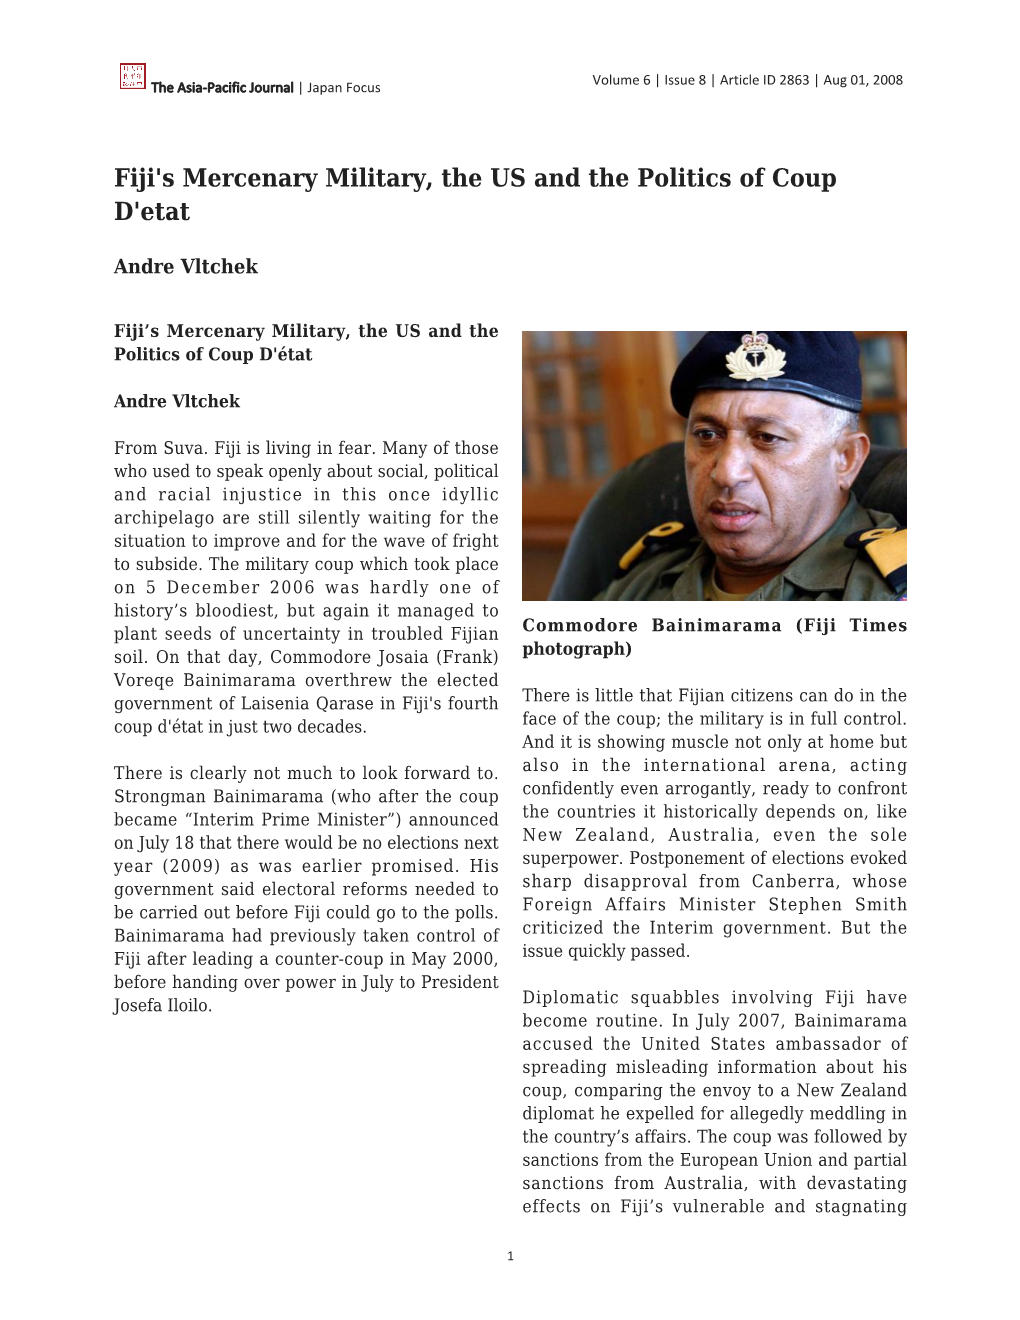 Fiji's Mercenary Military, the US and the Politics of Coup D'etat